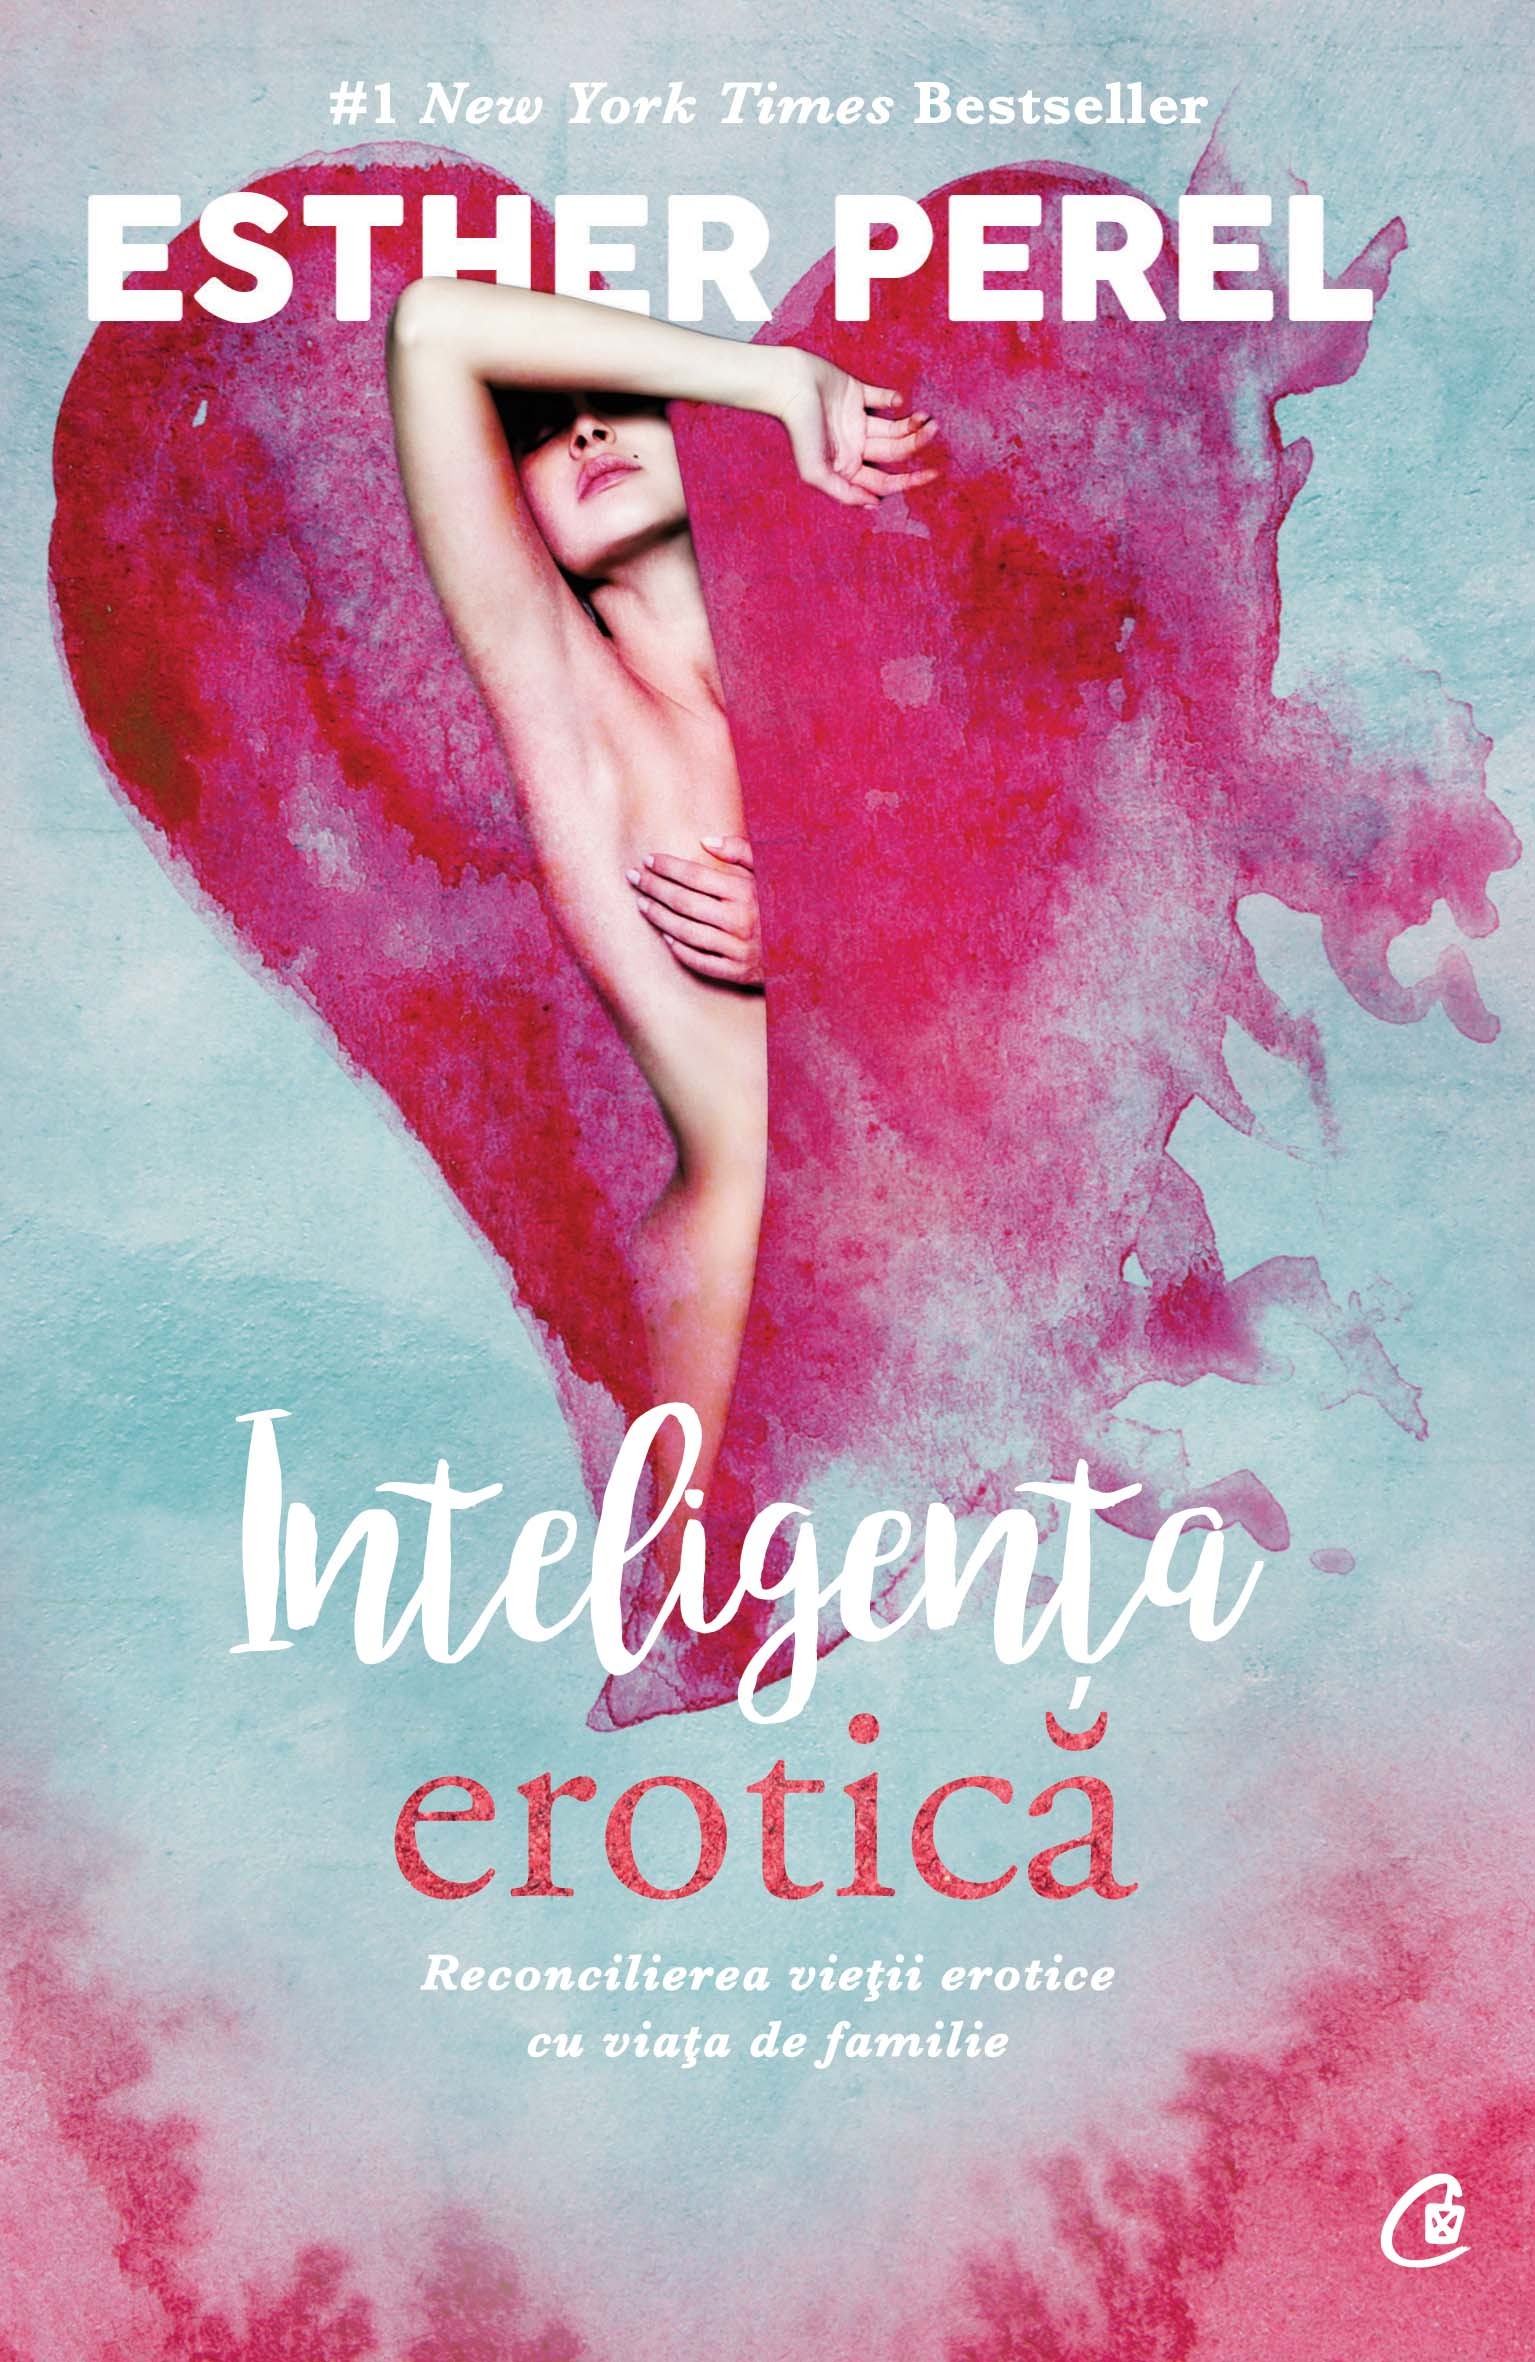 Inteligenta erotica ed.2016 - Esther Perel